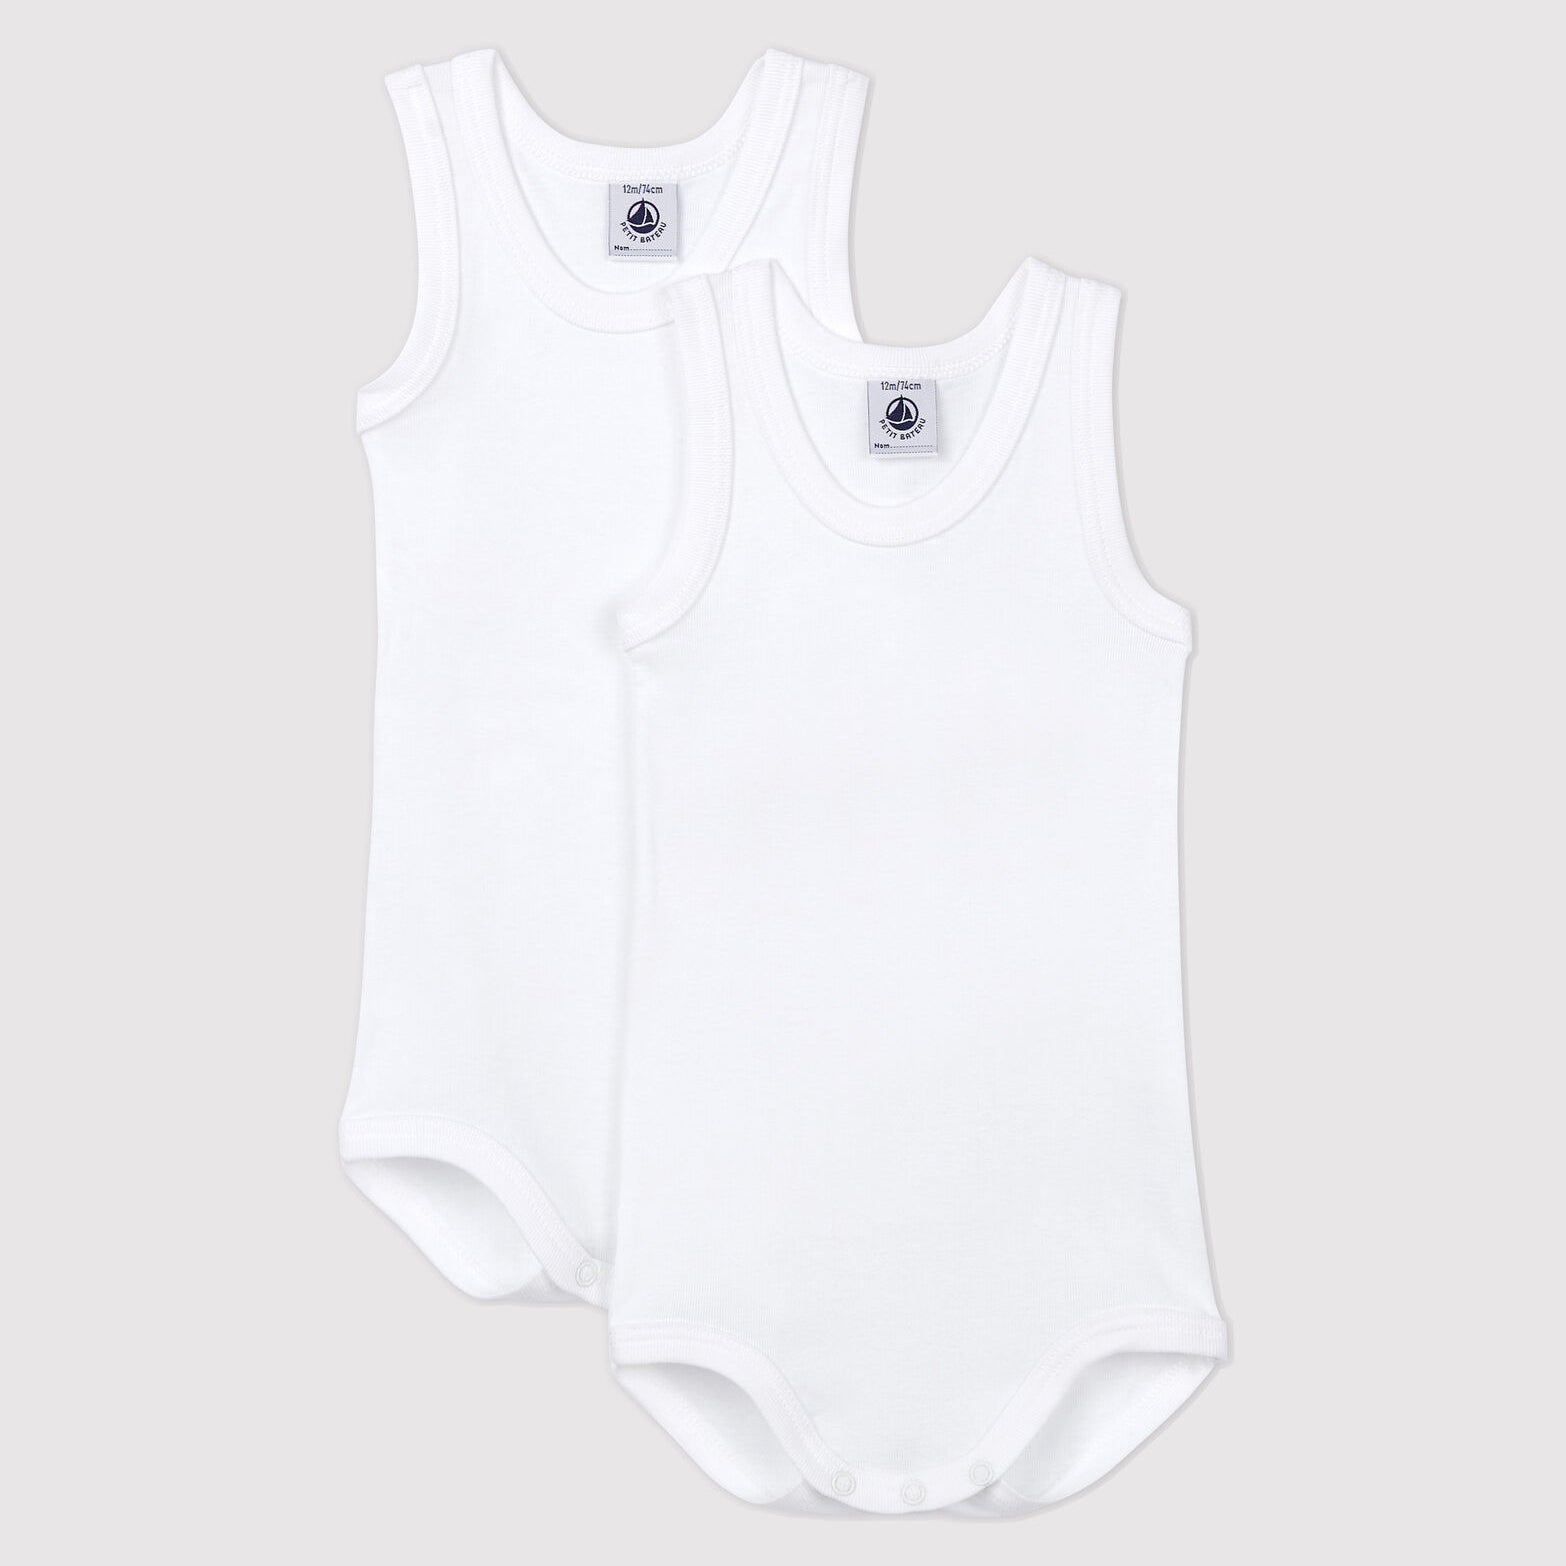 Baby Boys White Cotton Babysuit Set(2 Pack)